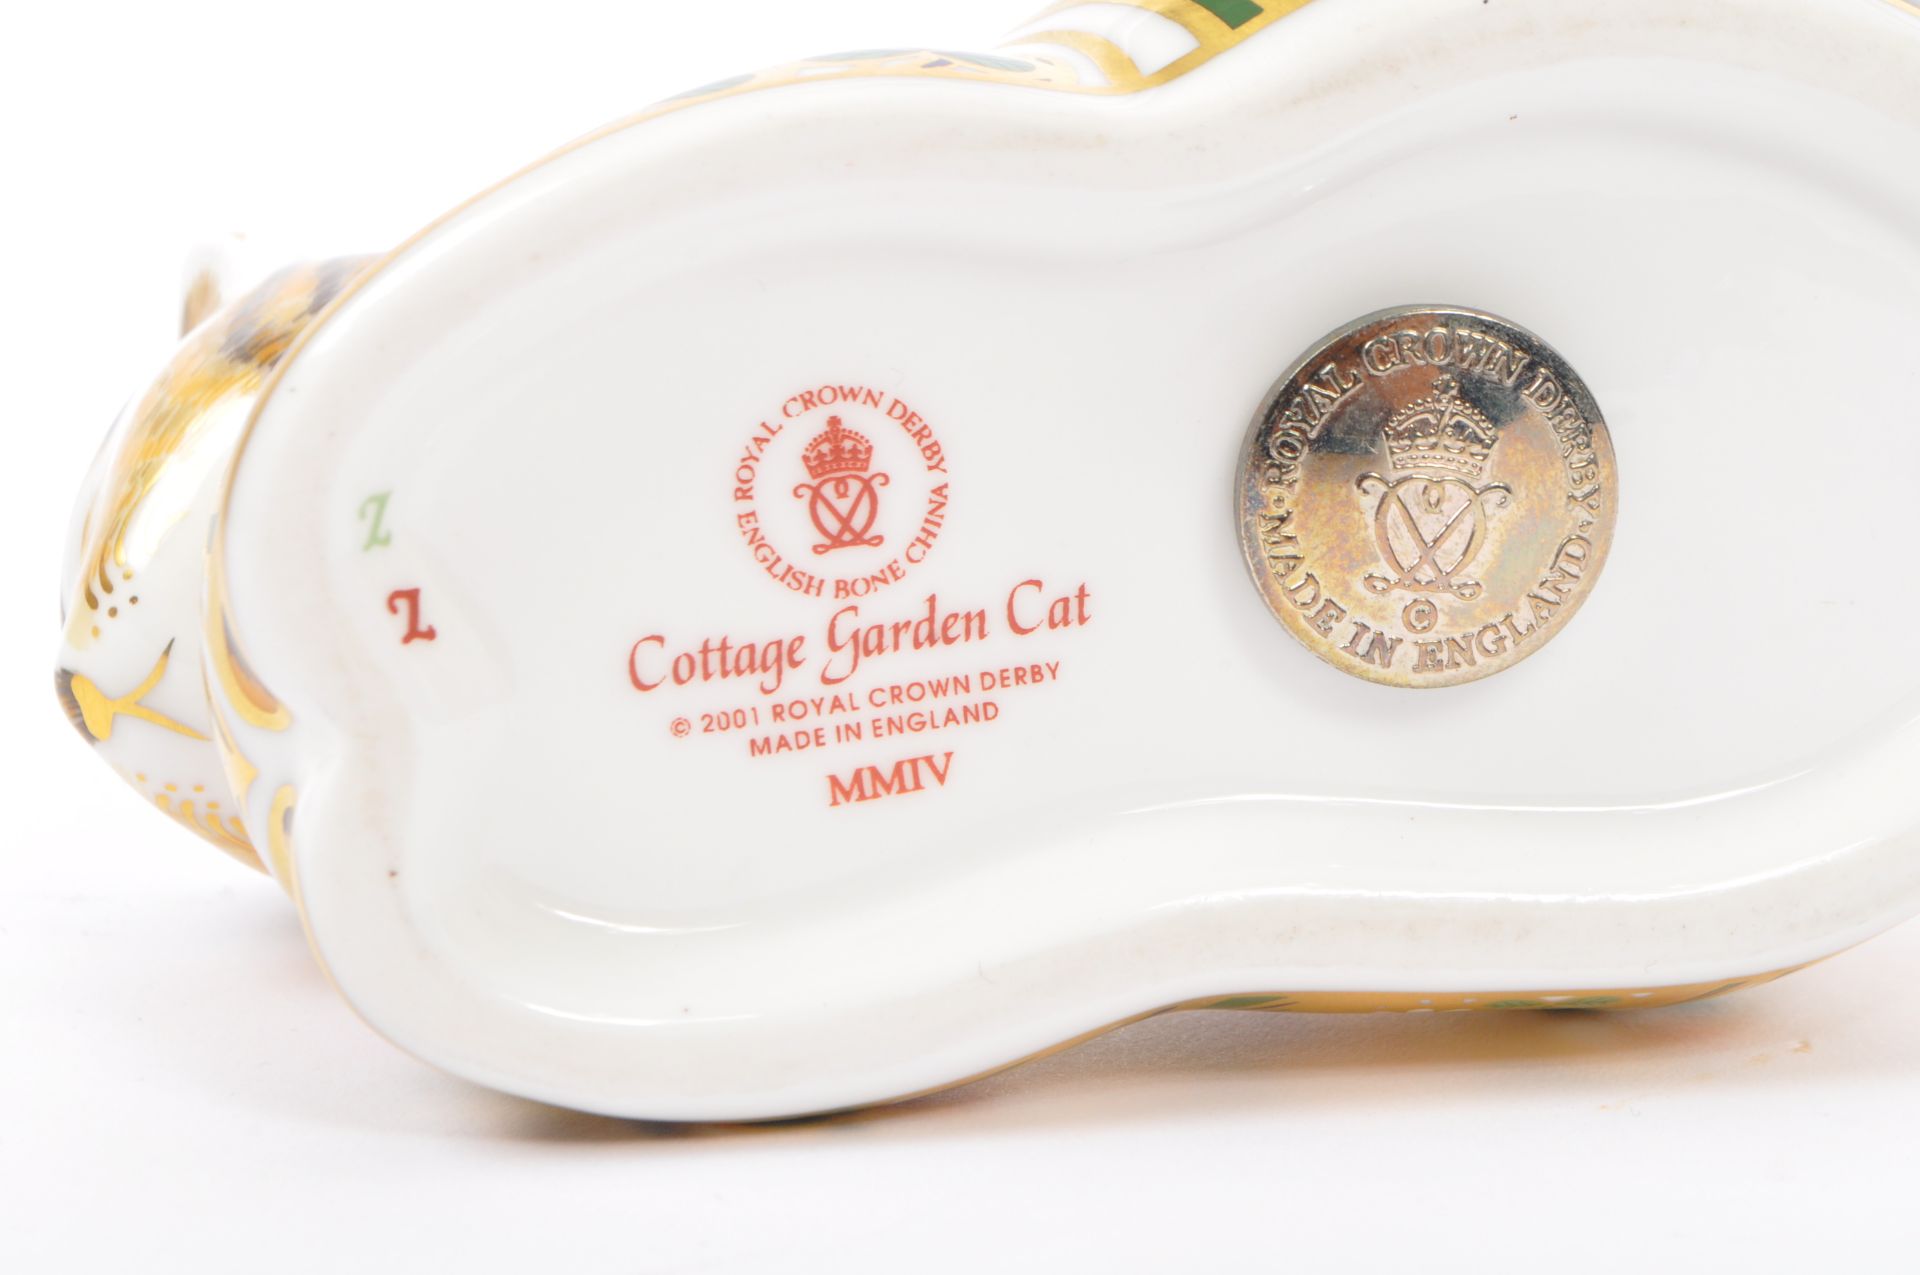 PORCELAIN COTTAGE GARDEN CAT FIGURINE BY ROYAL CROWN DERBY - Image 5 of 5